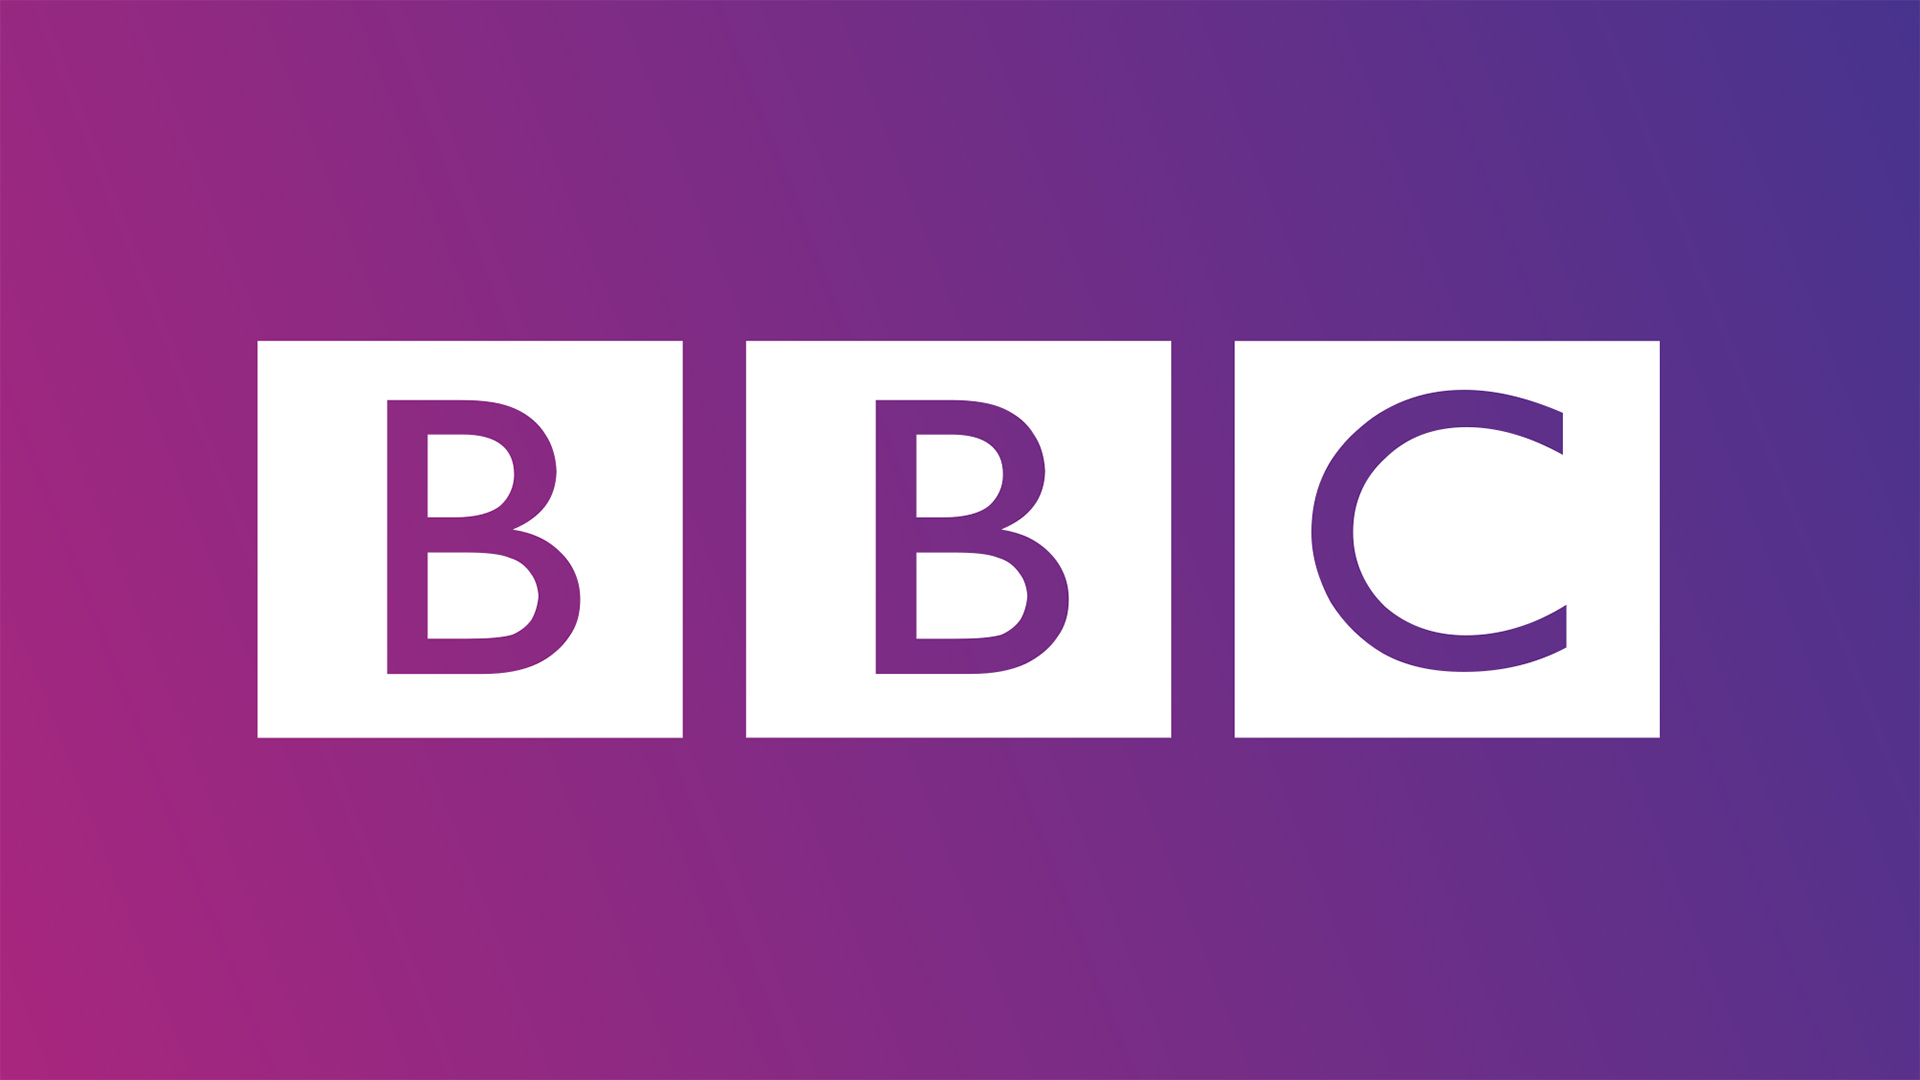 Nigeria threatens to punish BBC, local media bandit films